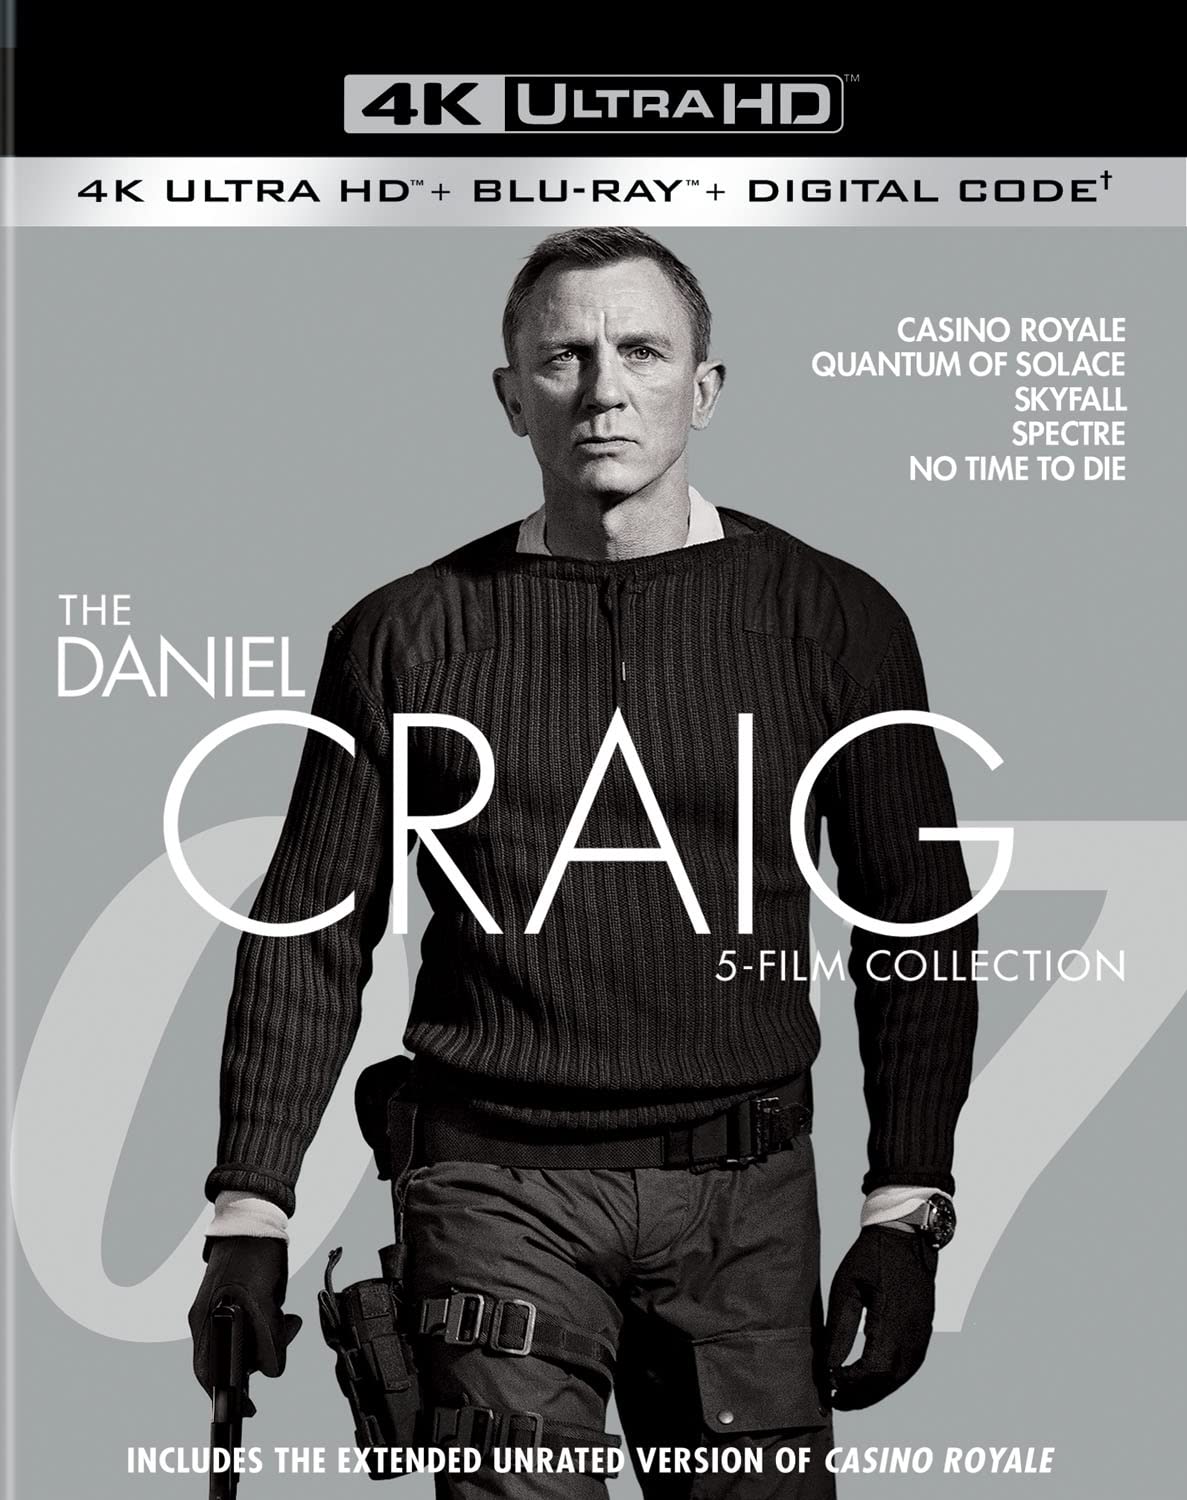 The Daniel Craig 5-Film Collection 4k Blu-ray